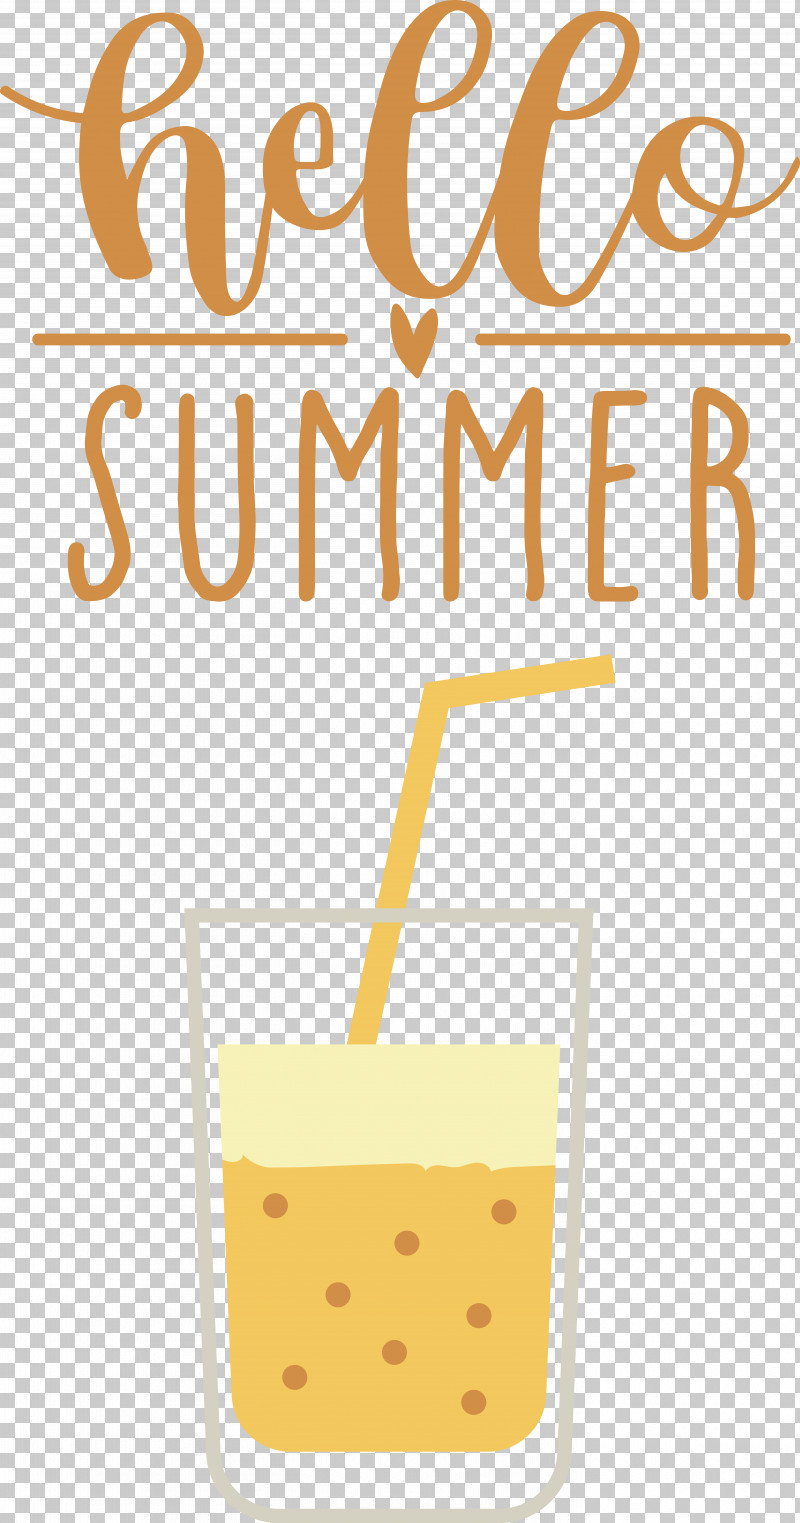 Summer Caluya Design PNG, Clipart, Caluya Design, Summer Free PNG Download